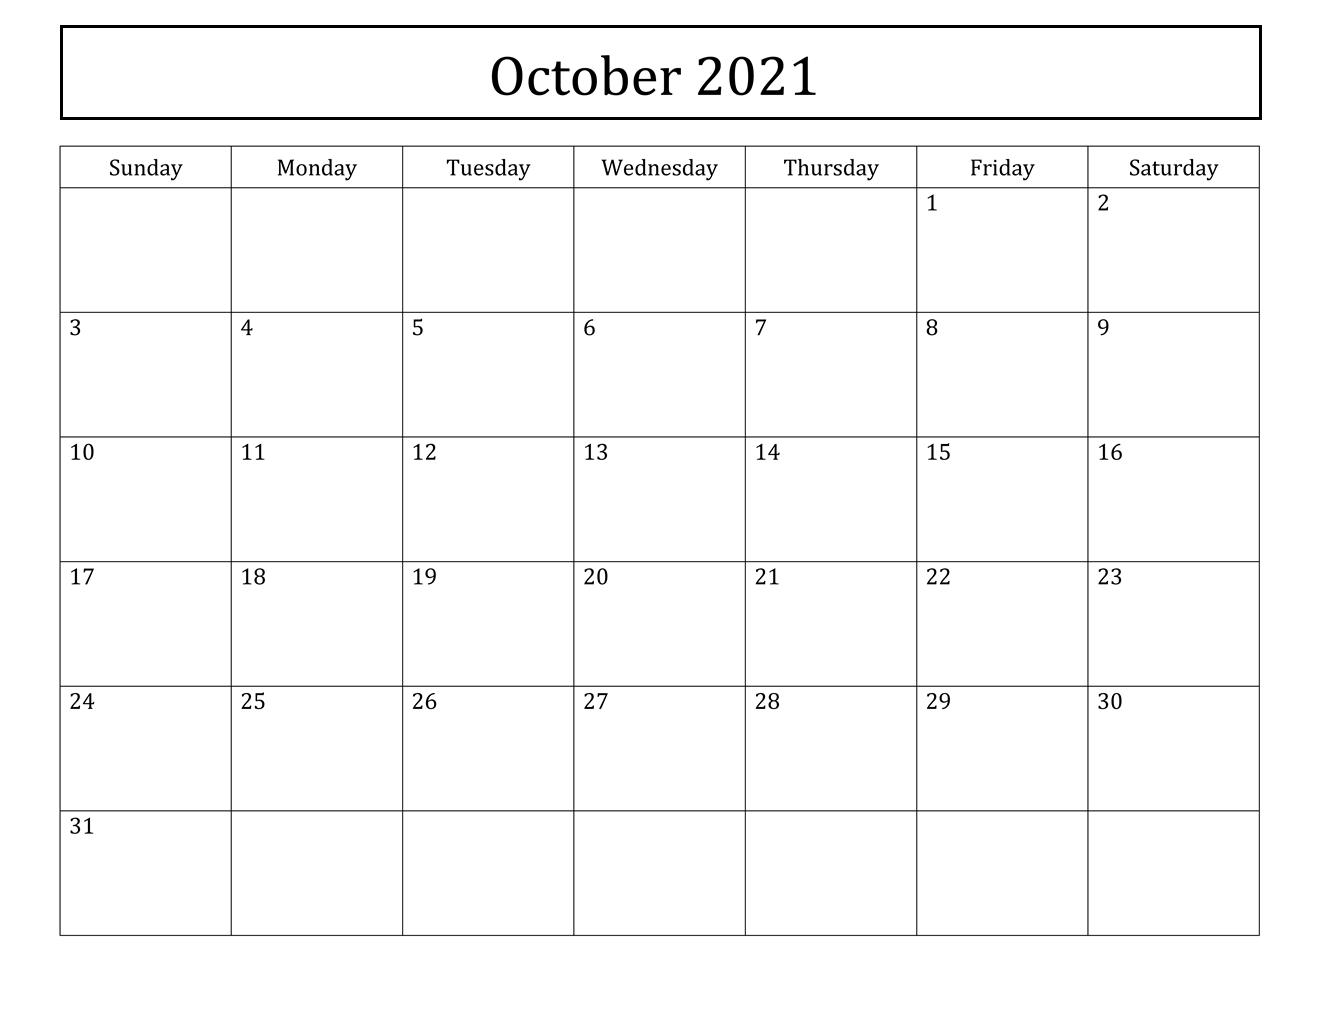 October 2021 Calendar With Festival